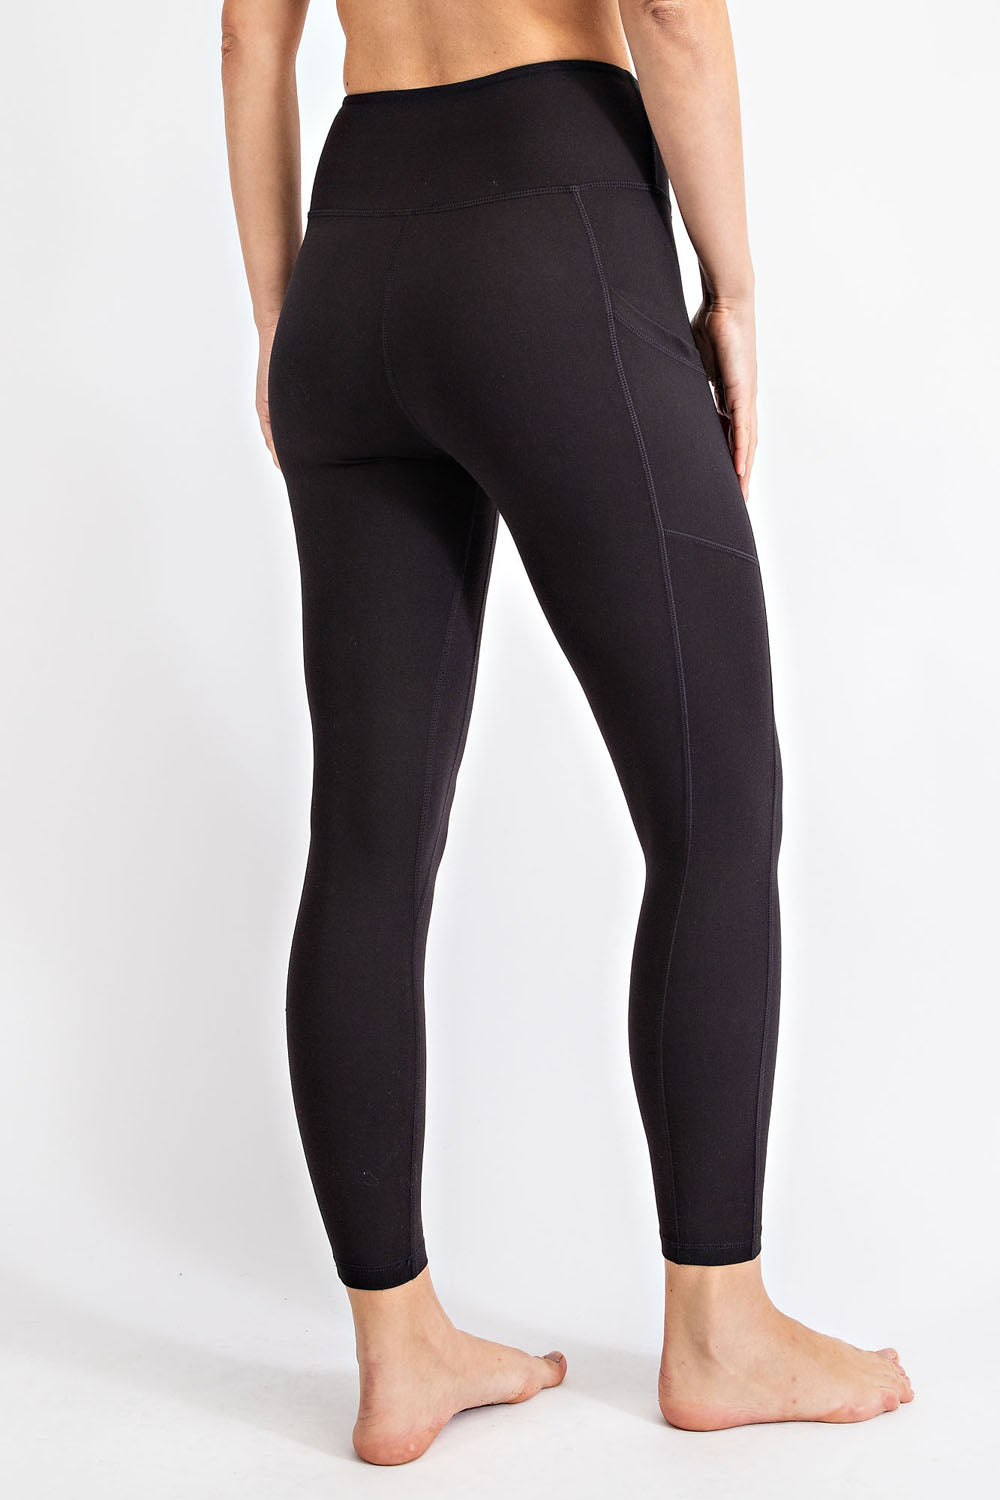 Rae Mode® U Crotch, Full Length Leggings with Pockets- Black